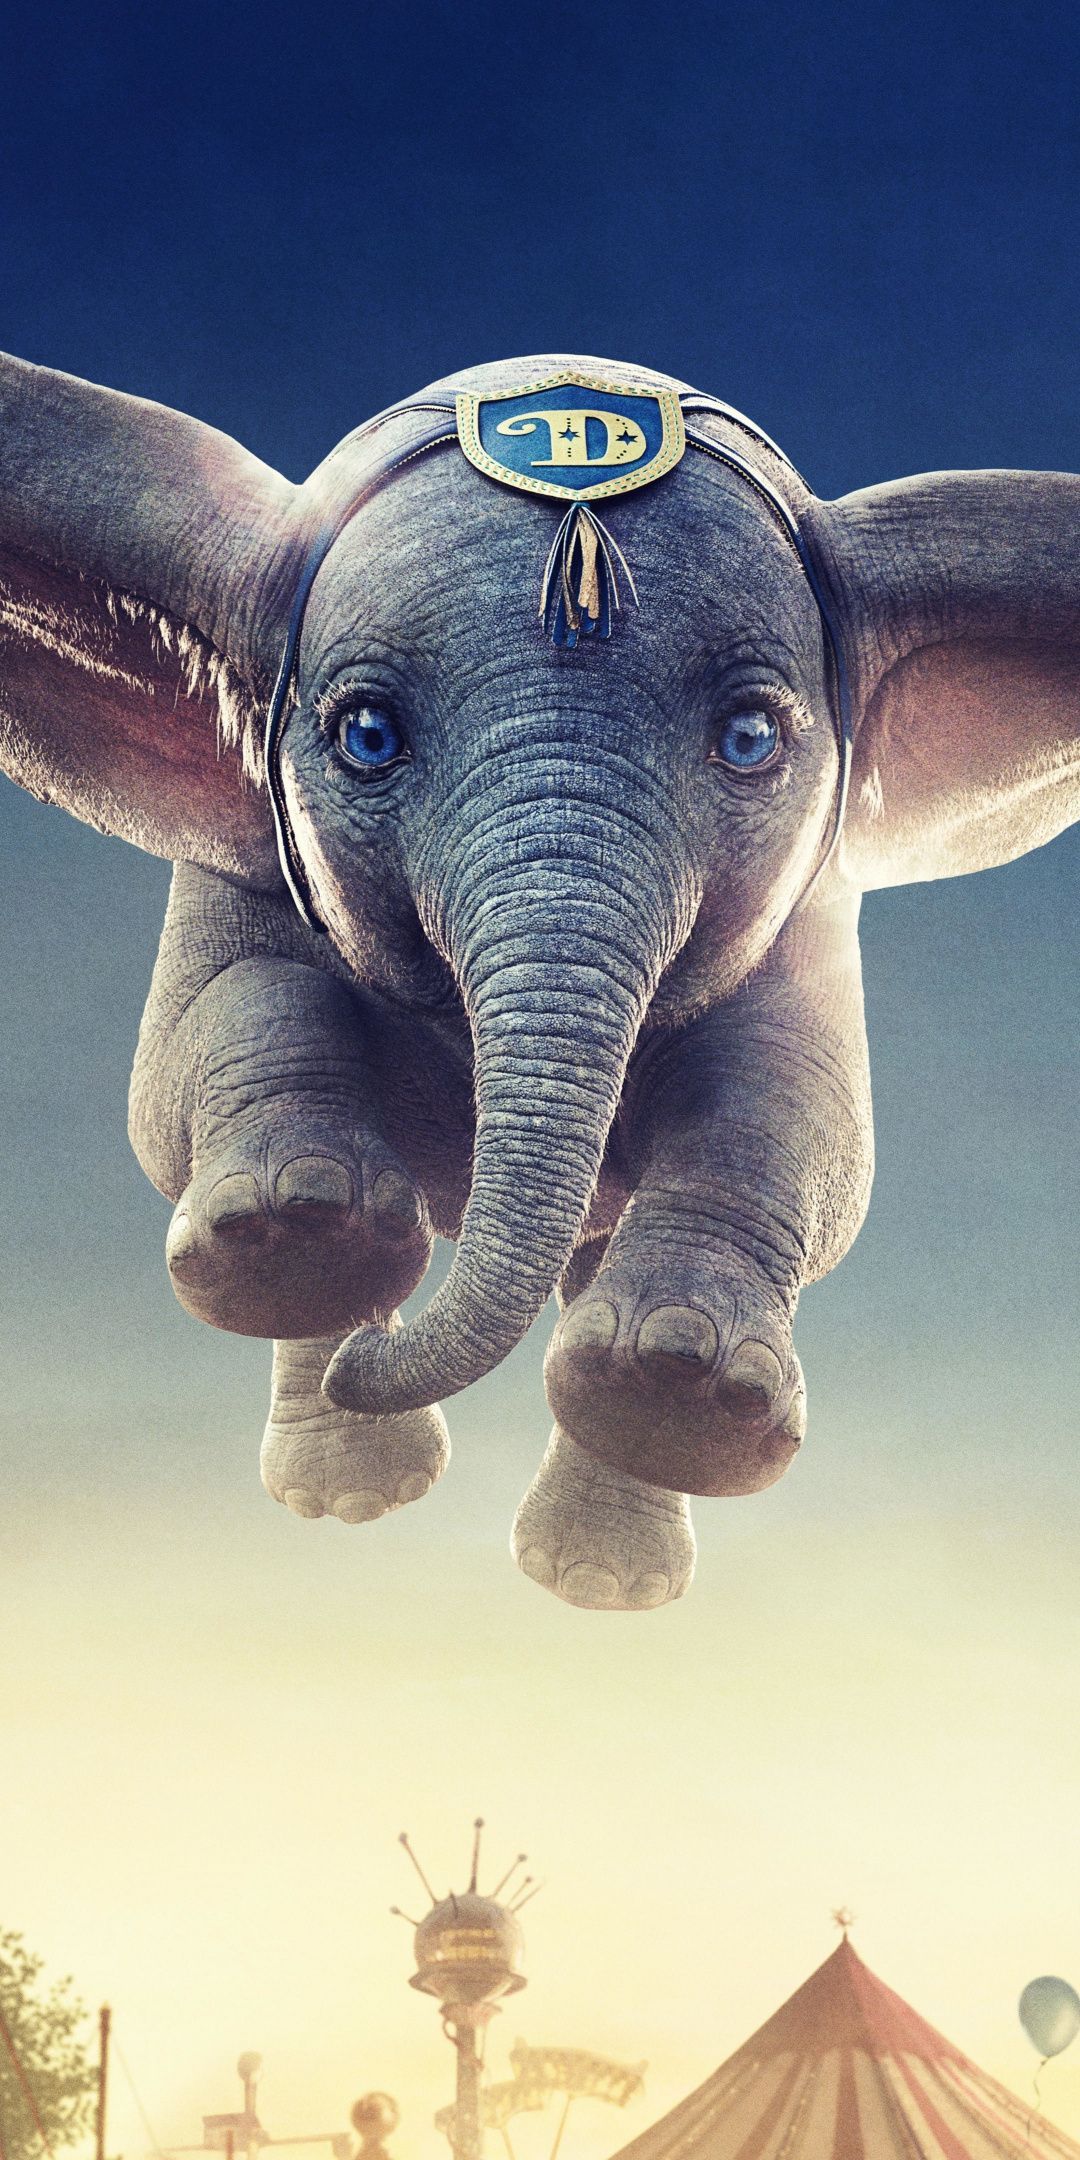 Flying elephant, Dumbo, 2019 movie wallpaper. Elephant, Flying elephant, Cartoon elephant